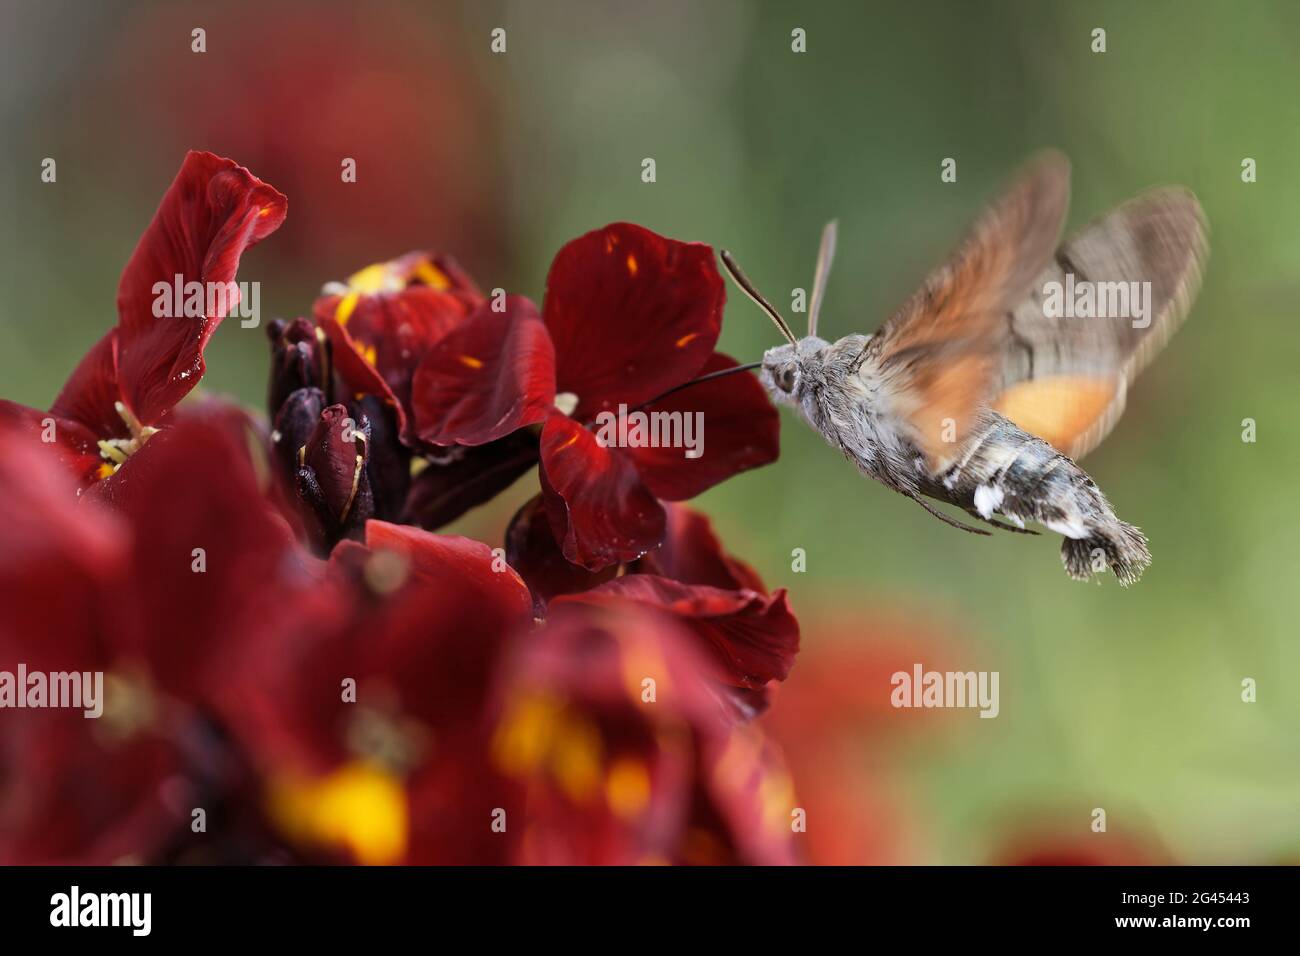 Kolibri-Falkenmotte auf einer Wandblume Stockfoto